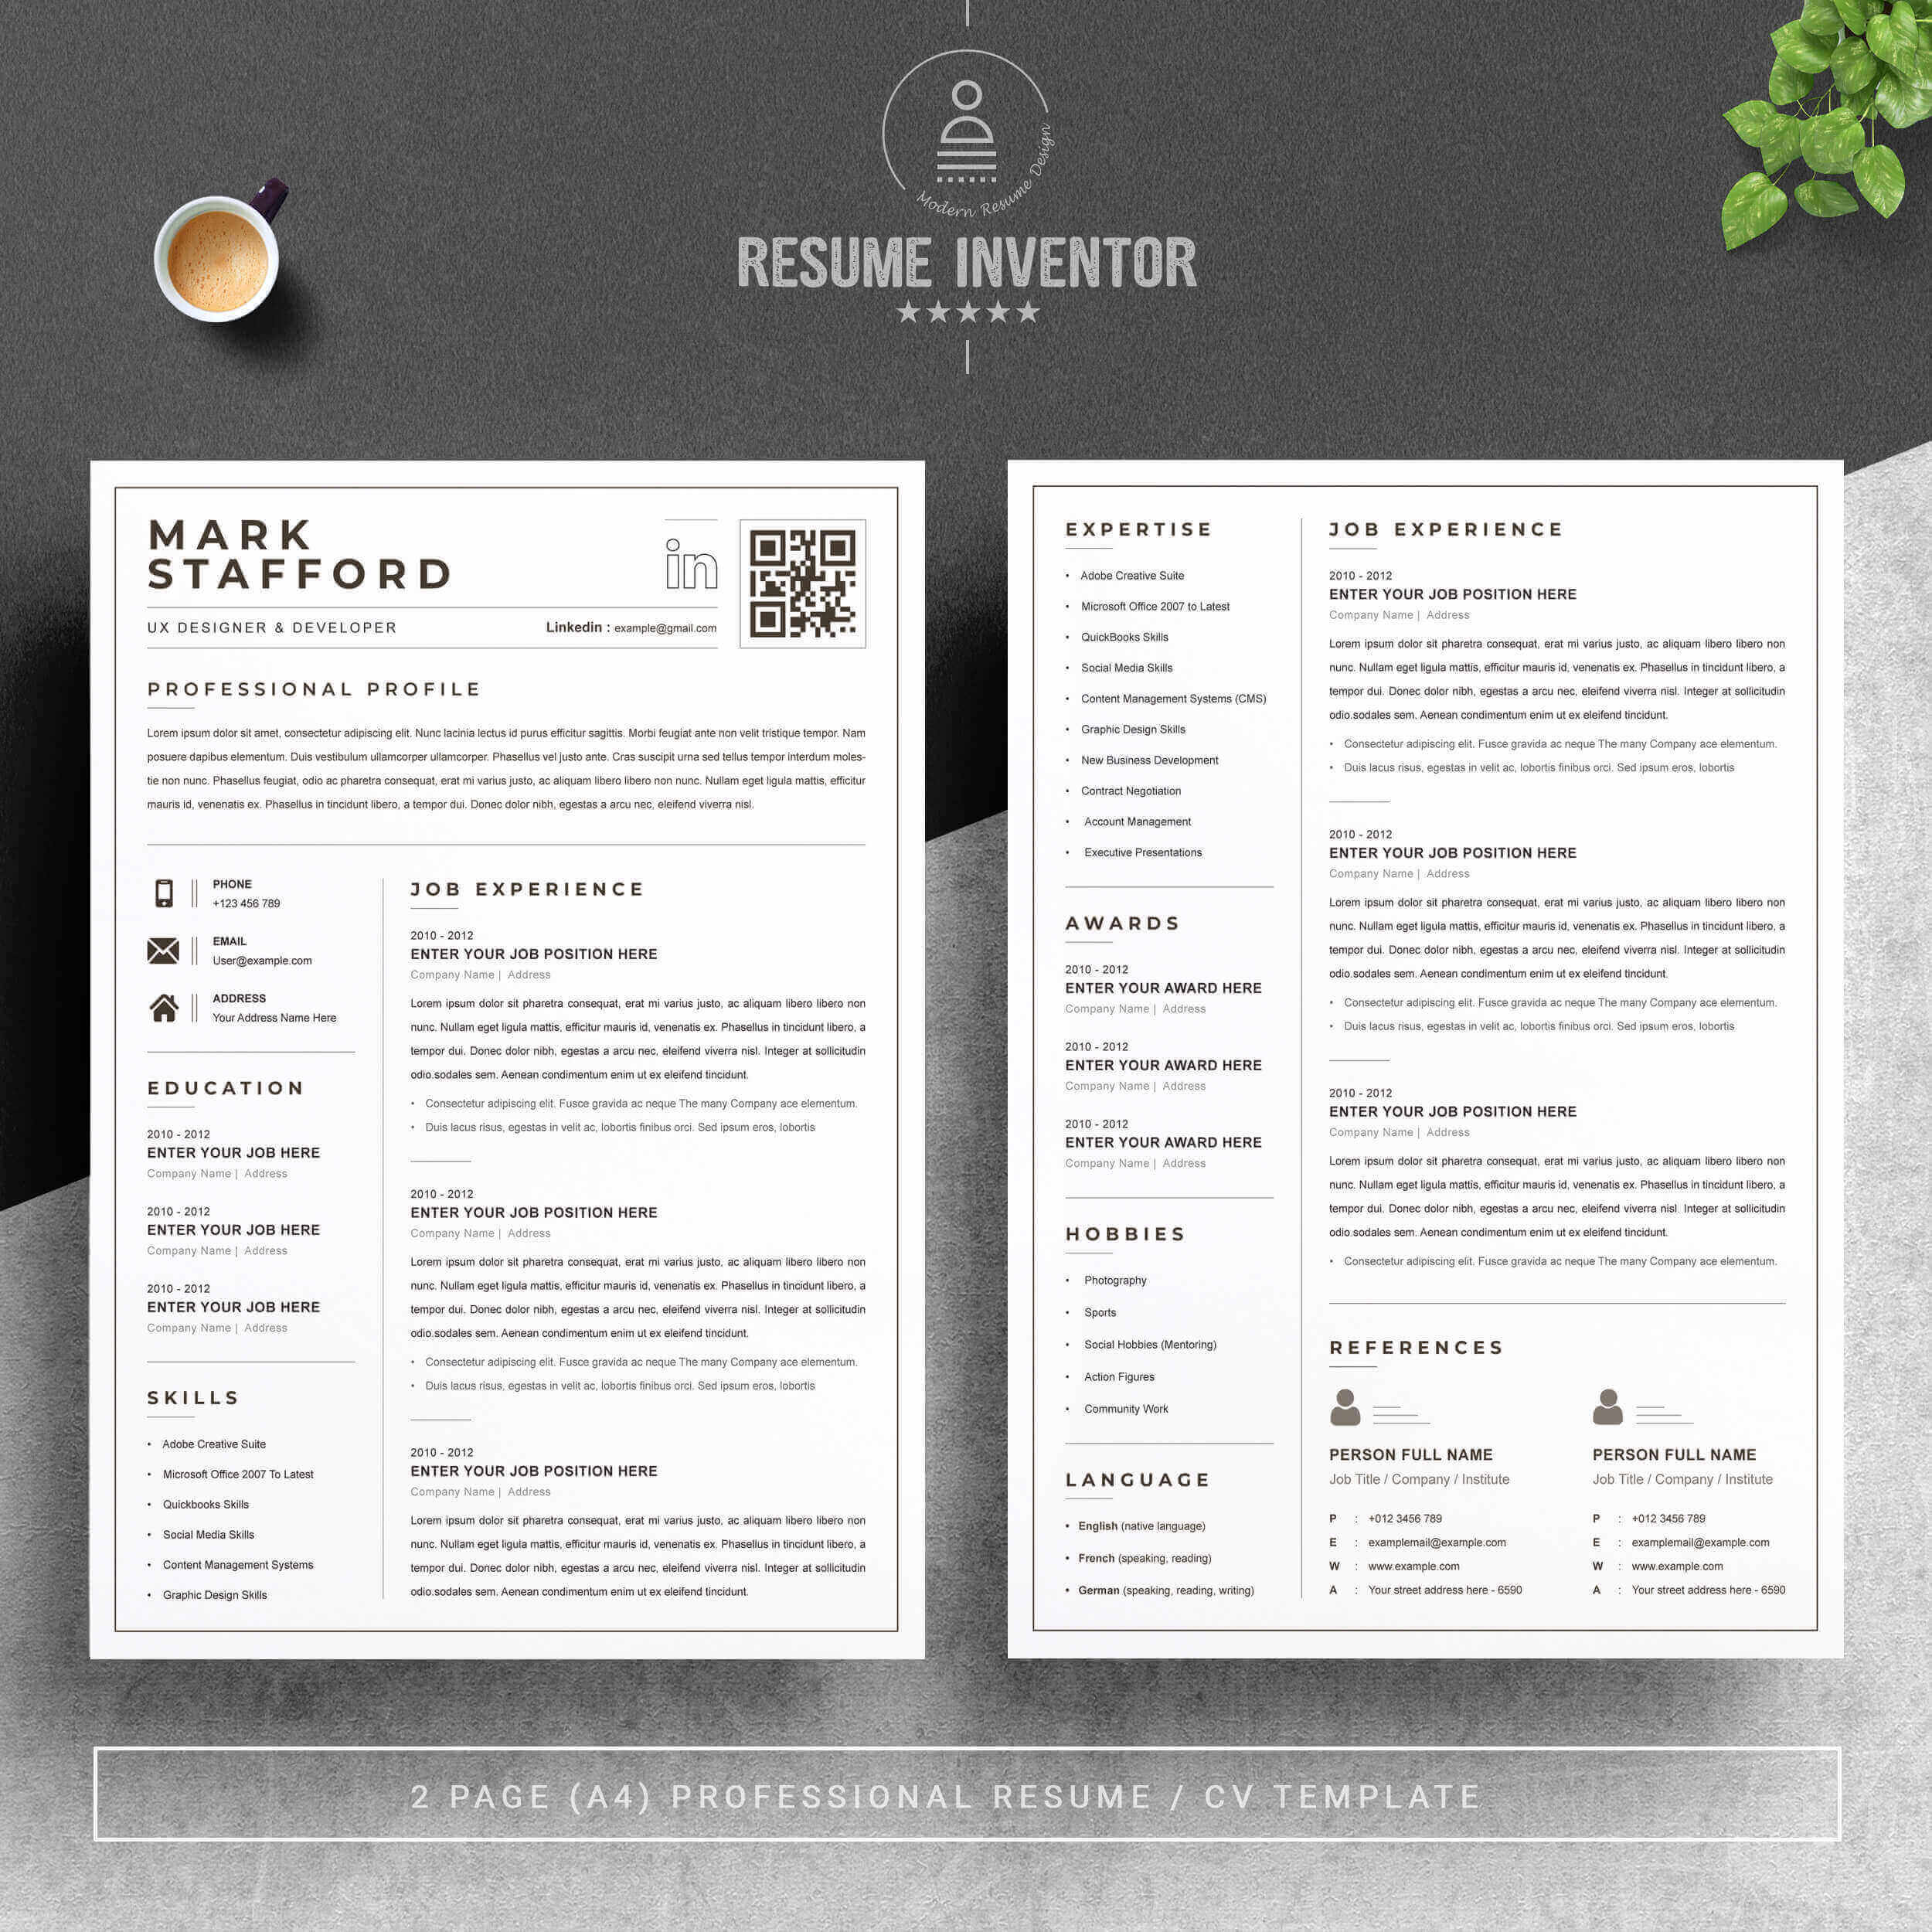 UX Designer & Developer Resume Template | Clean Resume Template preview image.